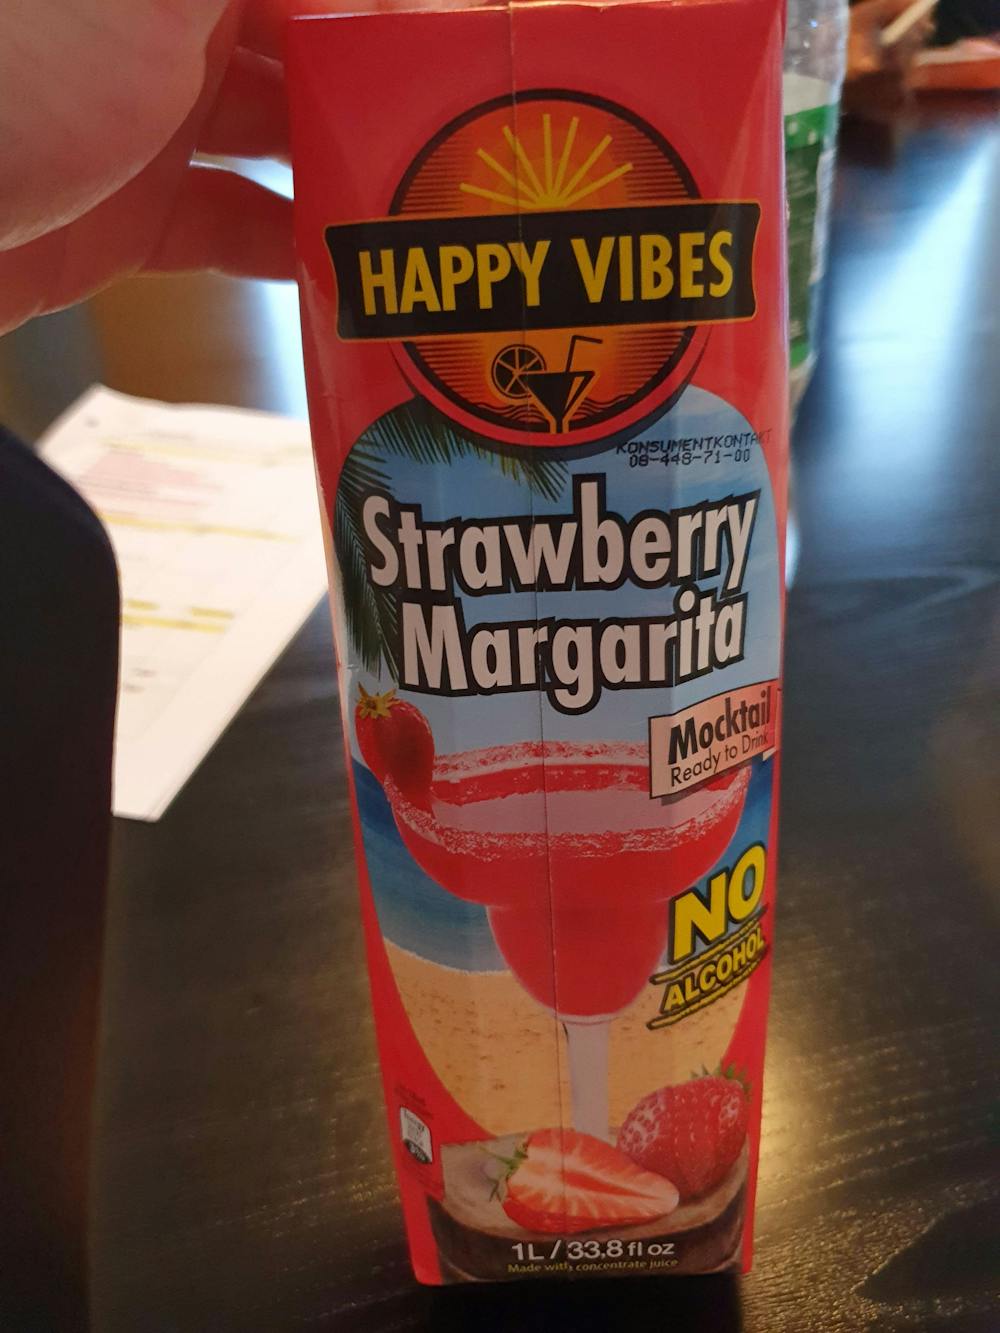 Strawberry margarita no alcohol, Happy vibes